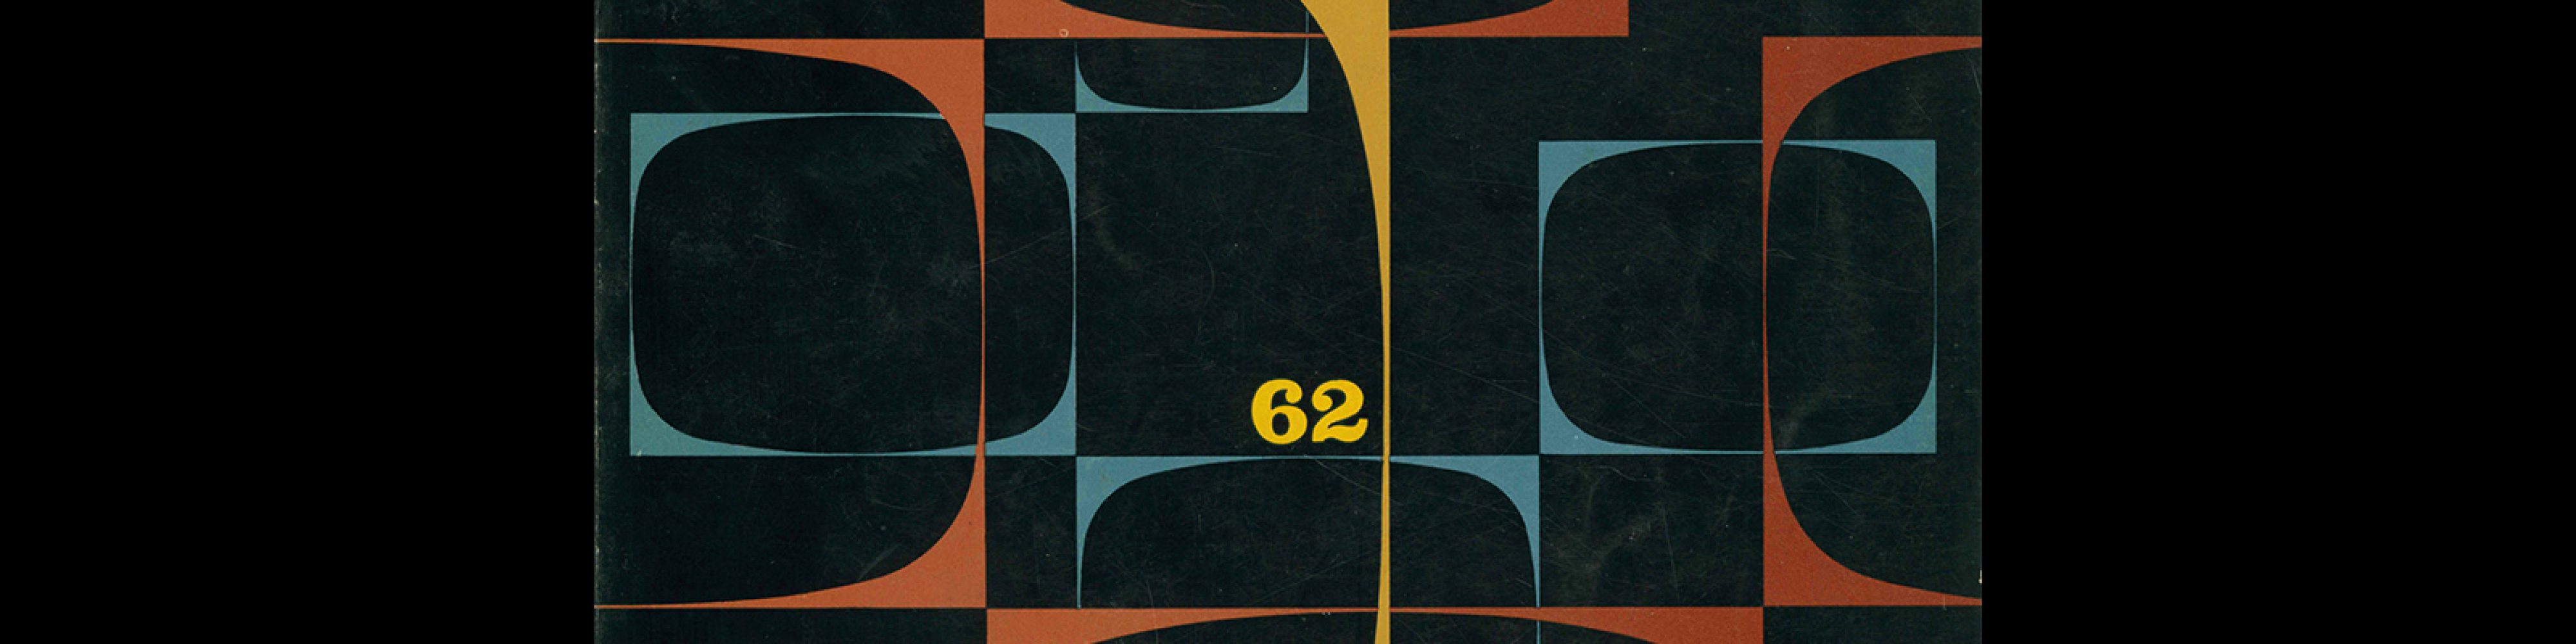 Idea 62, 1963. Cover design by Stan Stubenberg.